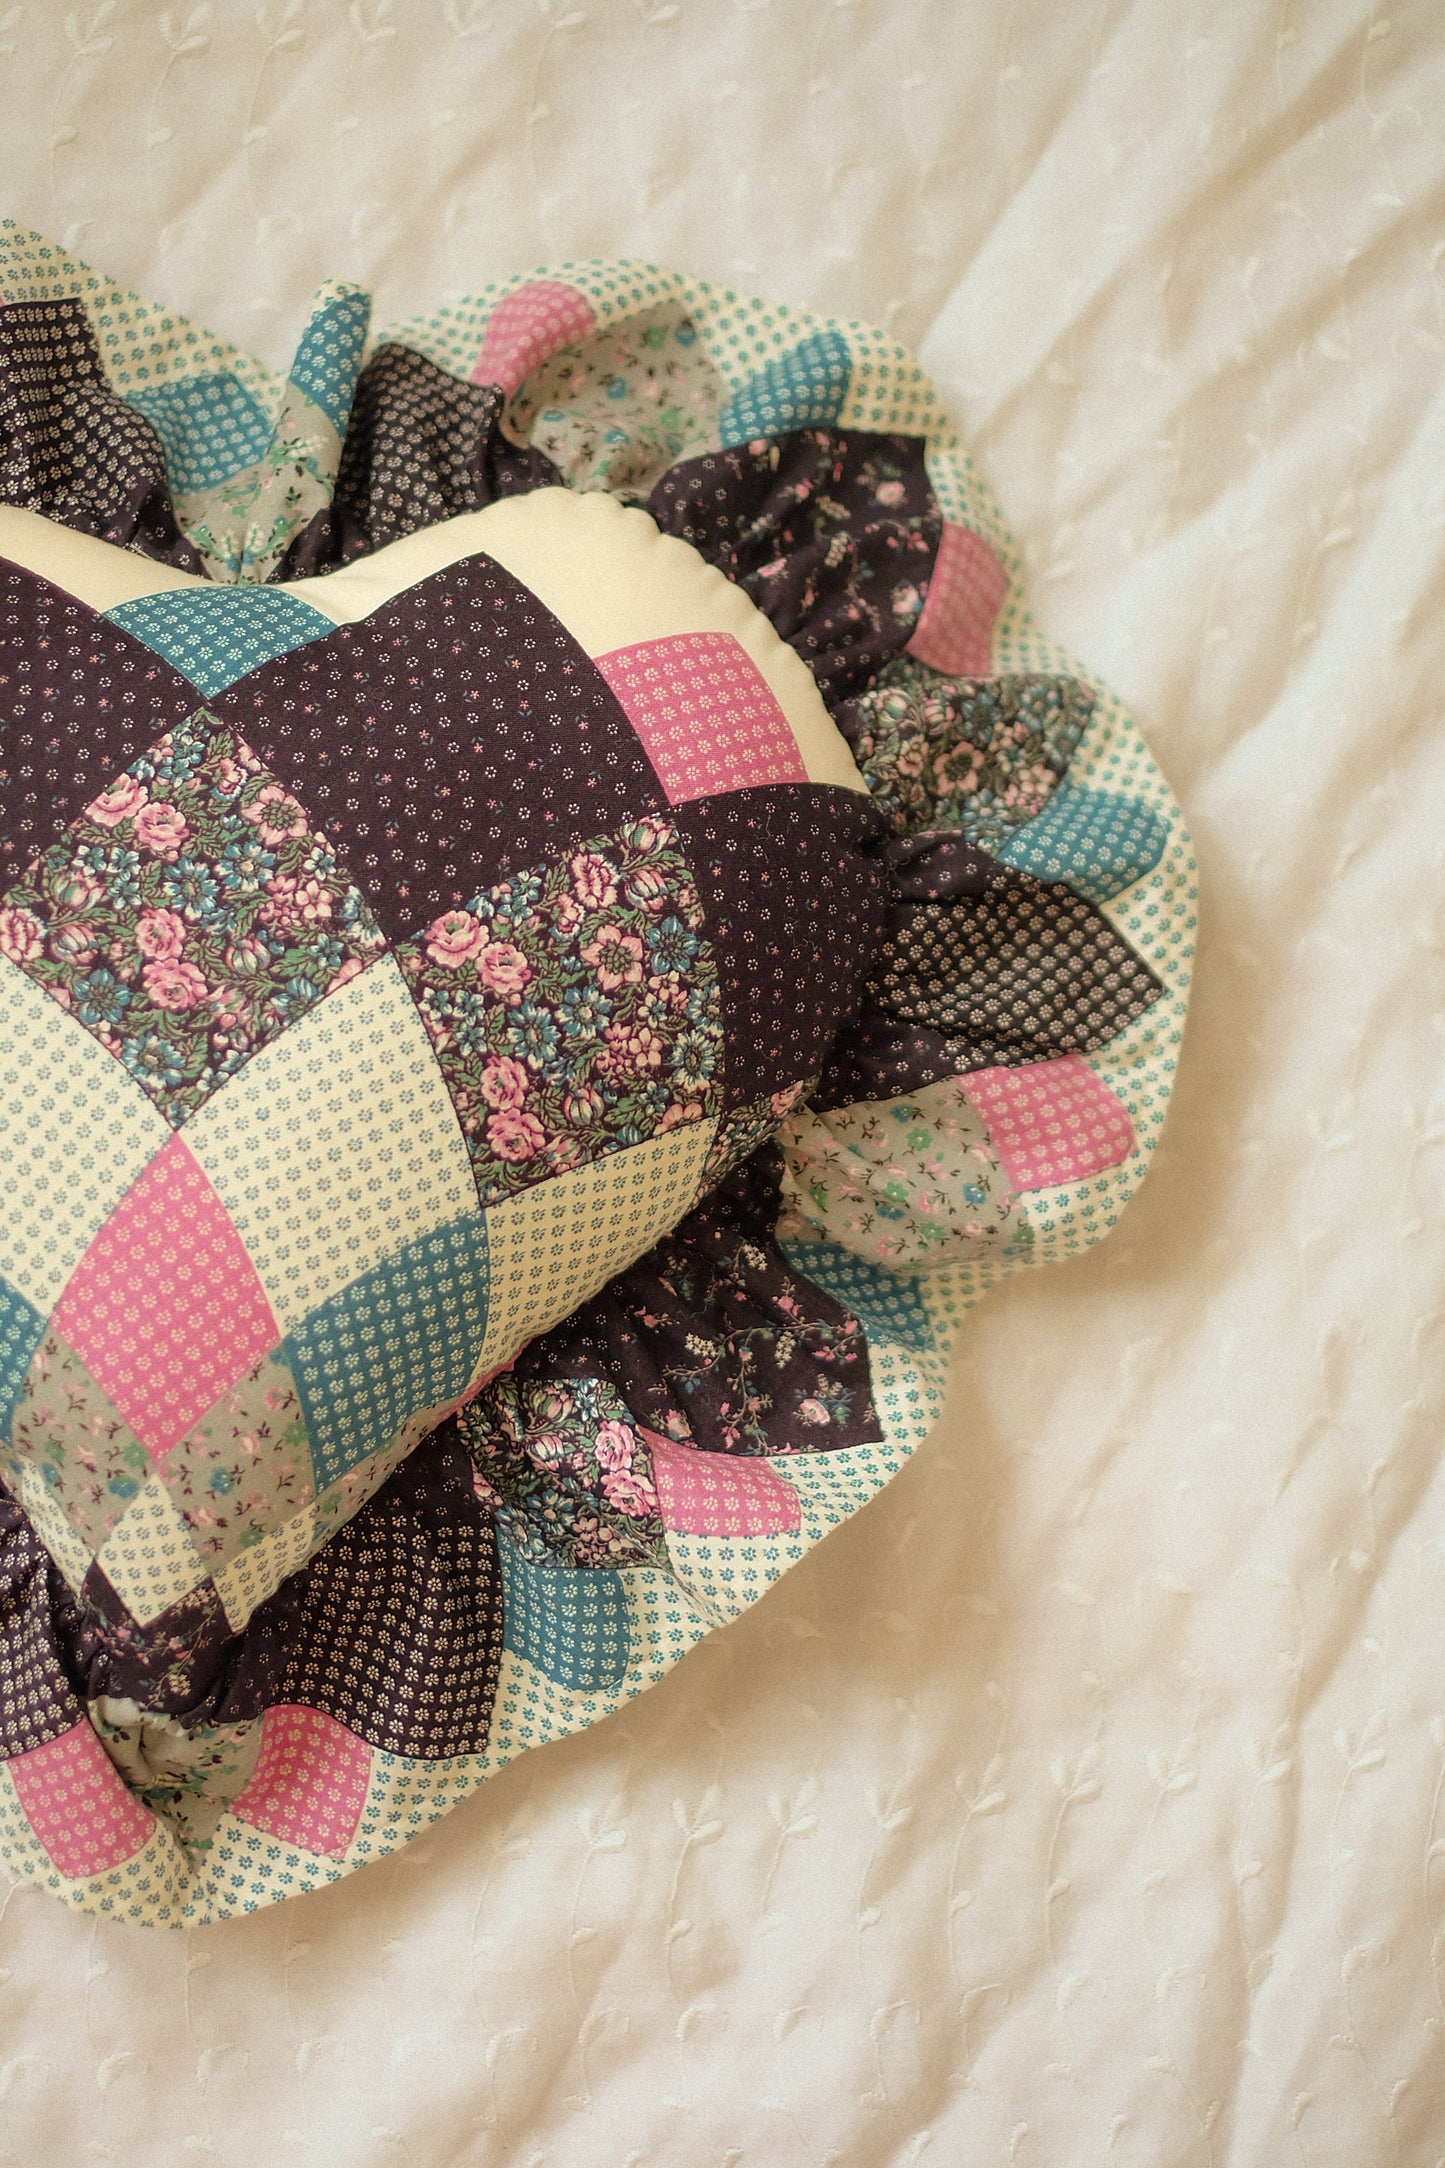 Handmade ruffled heart pillow - Granny's quilt♡